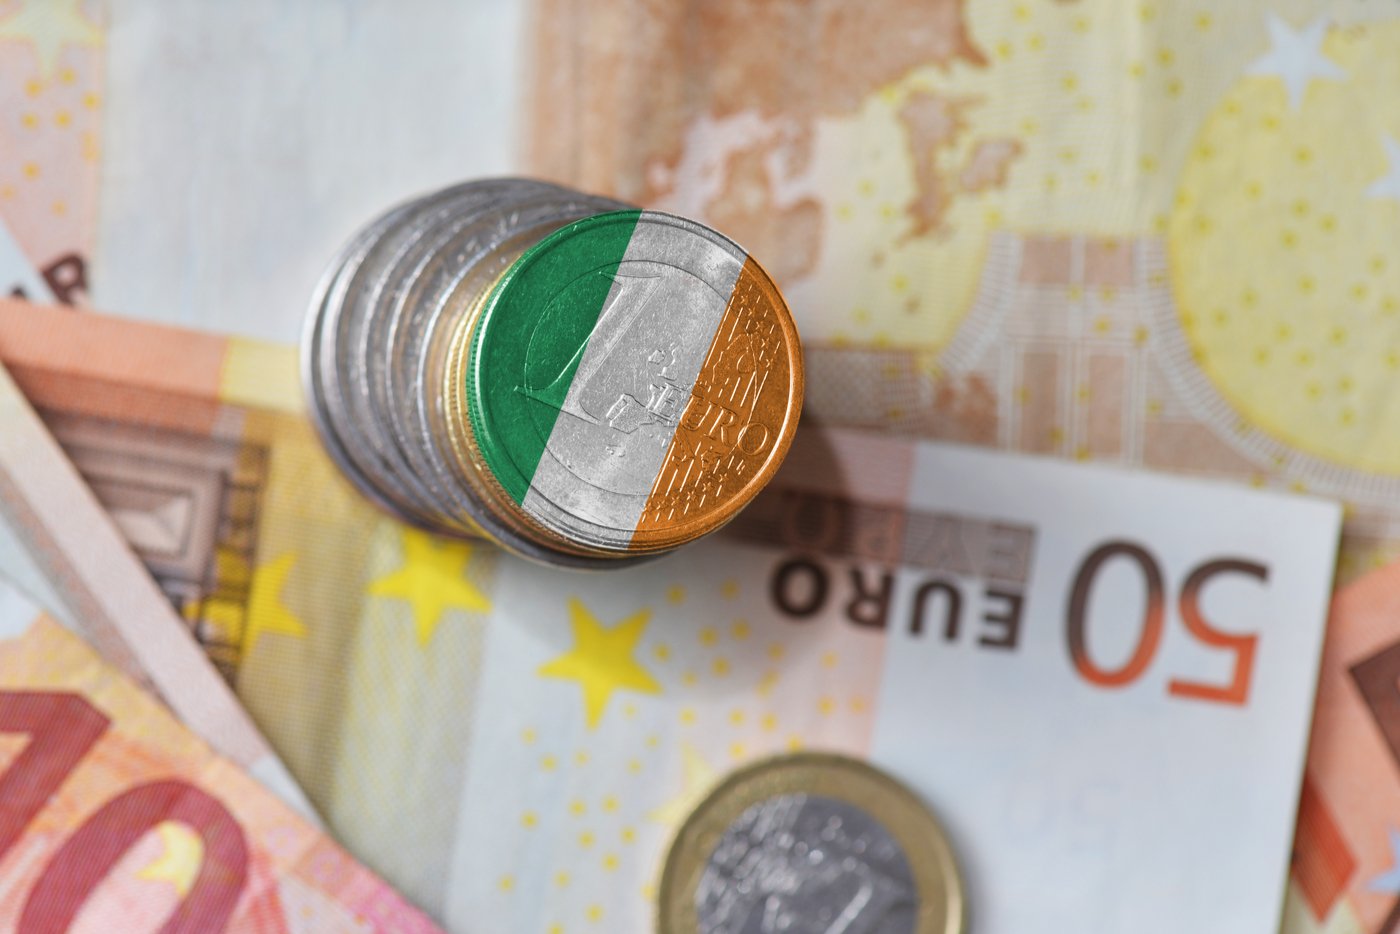 The Irish economy grew last year in Europe